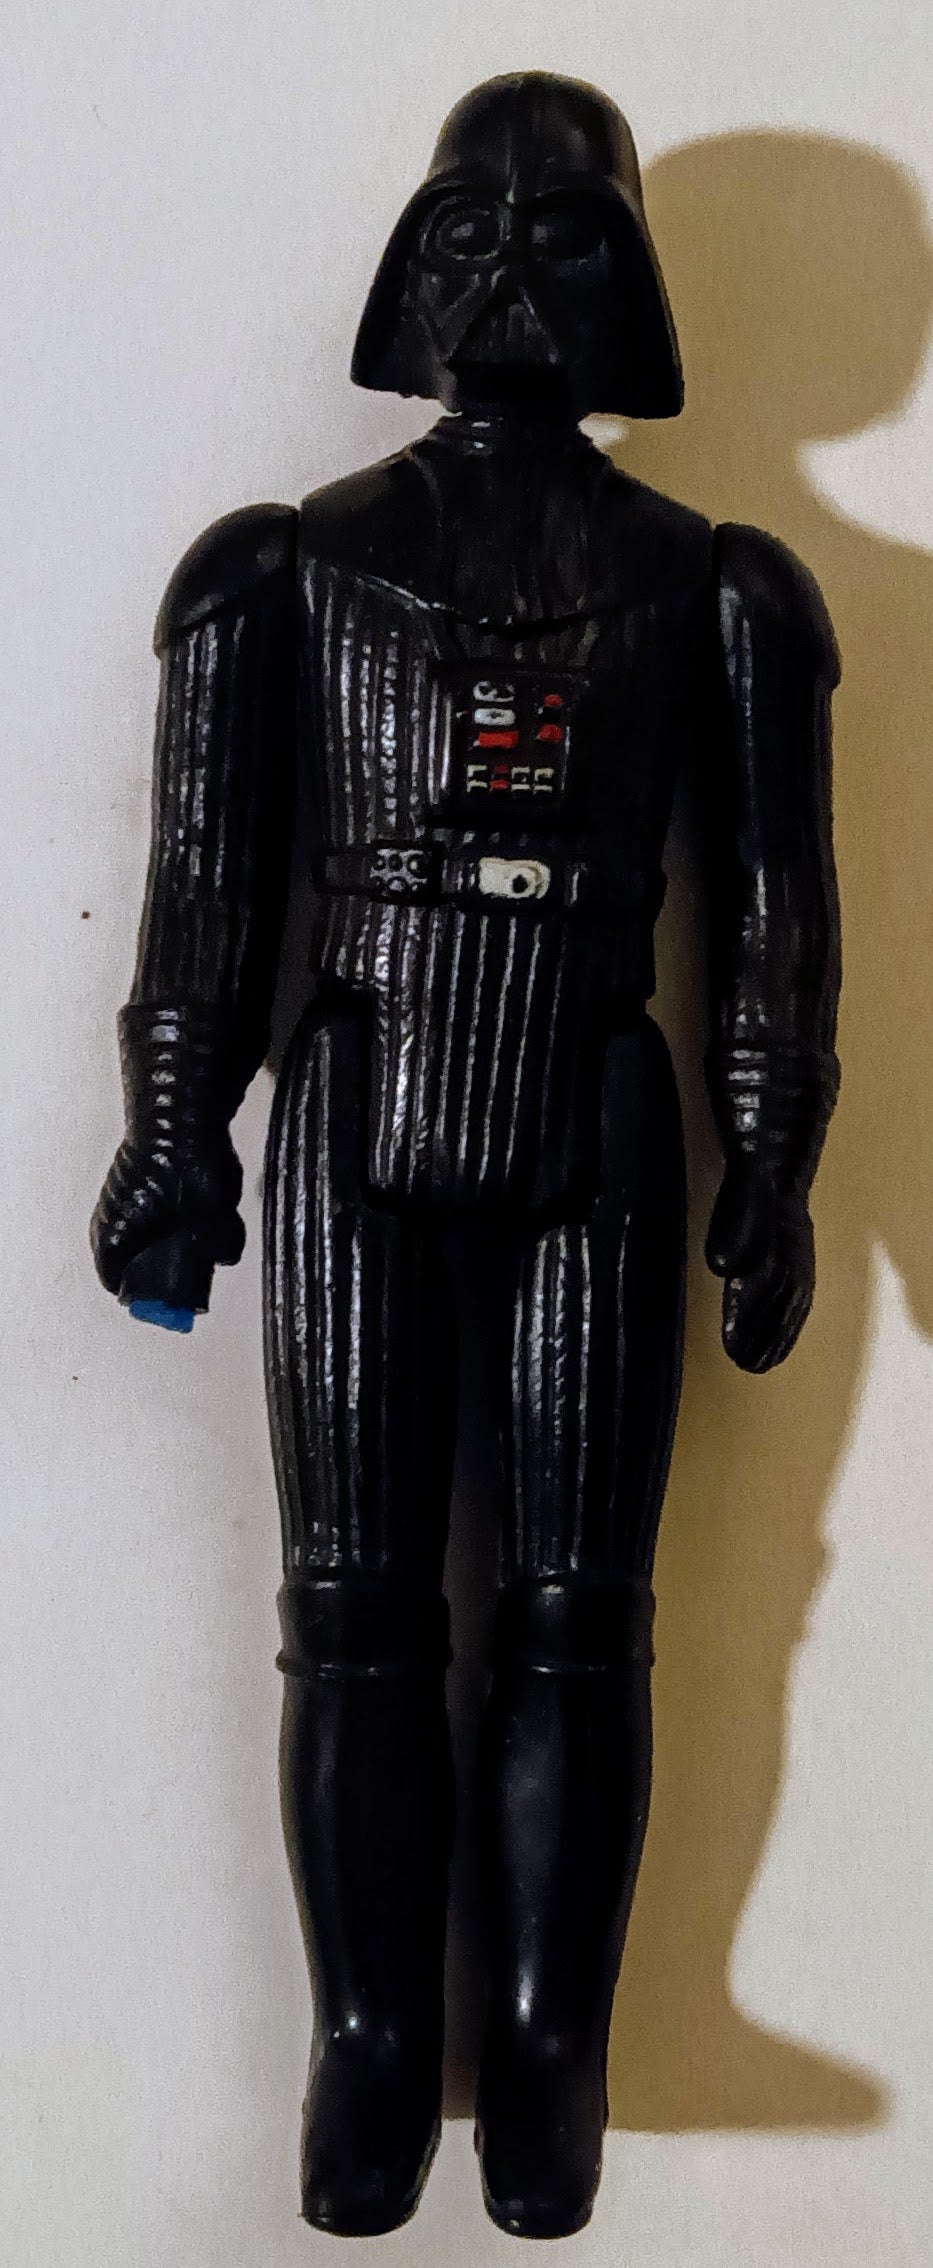 Star Wars action figure - Darth Vader